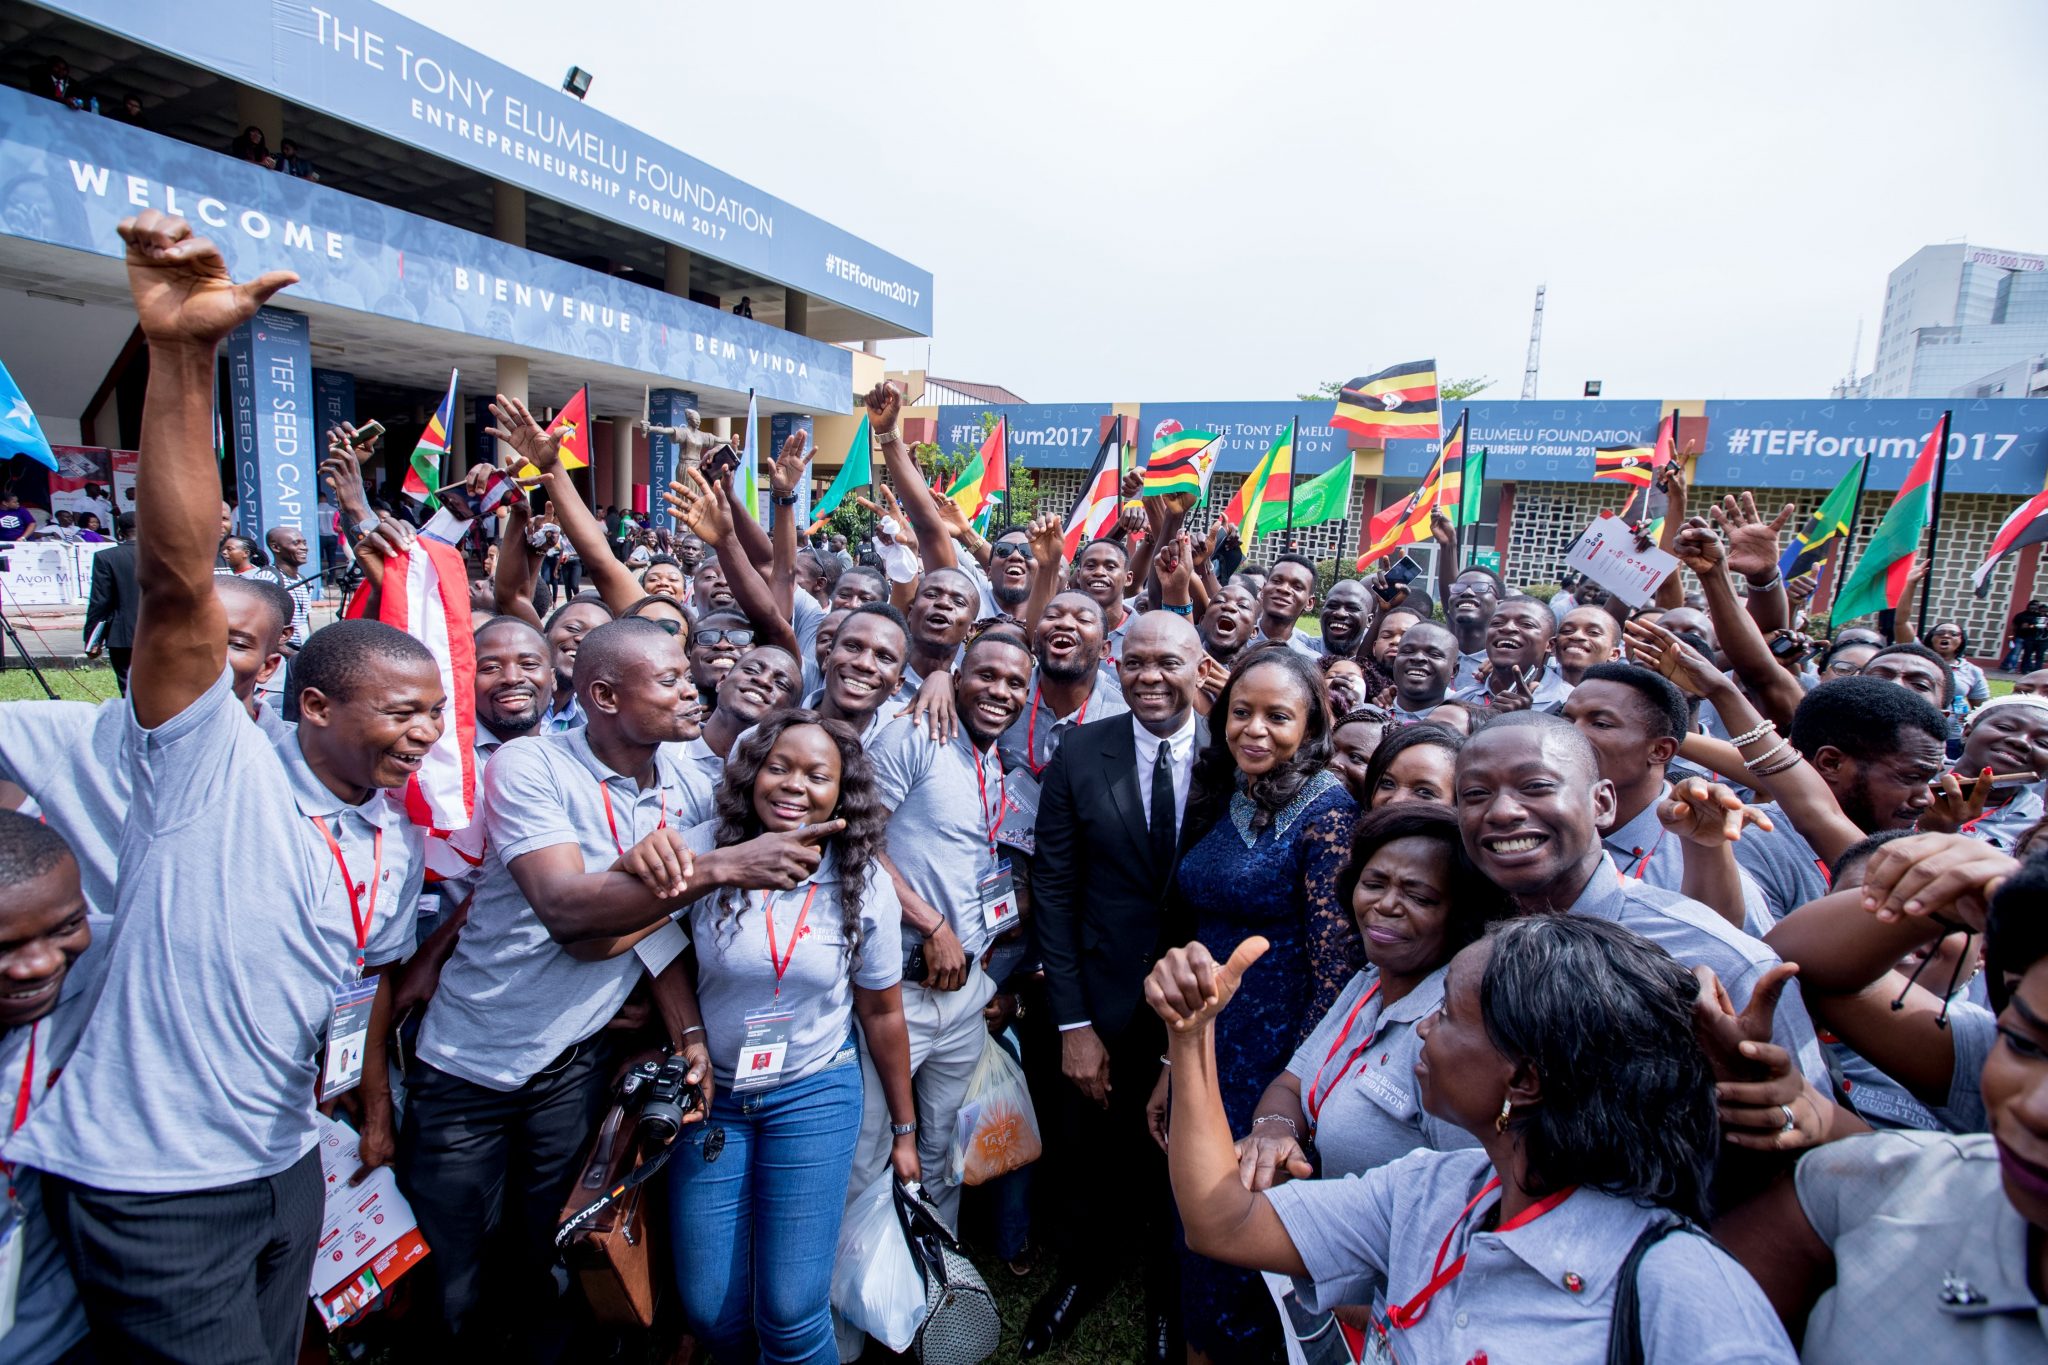 Tony Elumelu Foundation, EU initiate €20m partnership to empower African women entrepreneurs